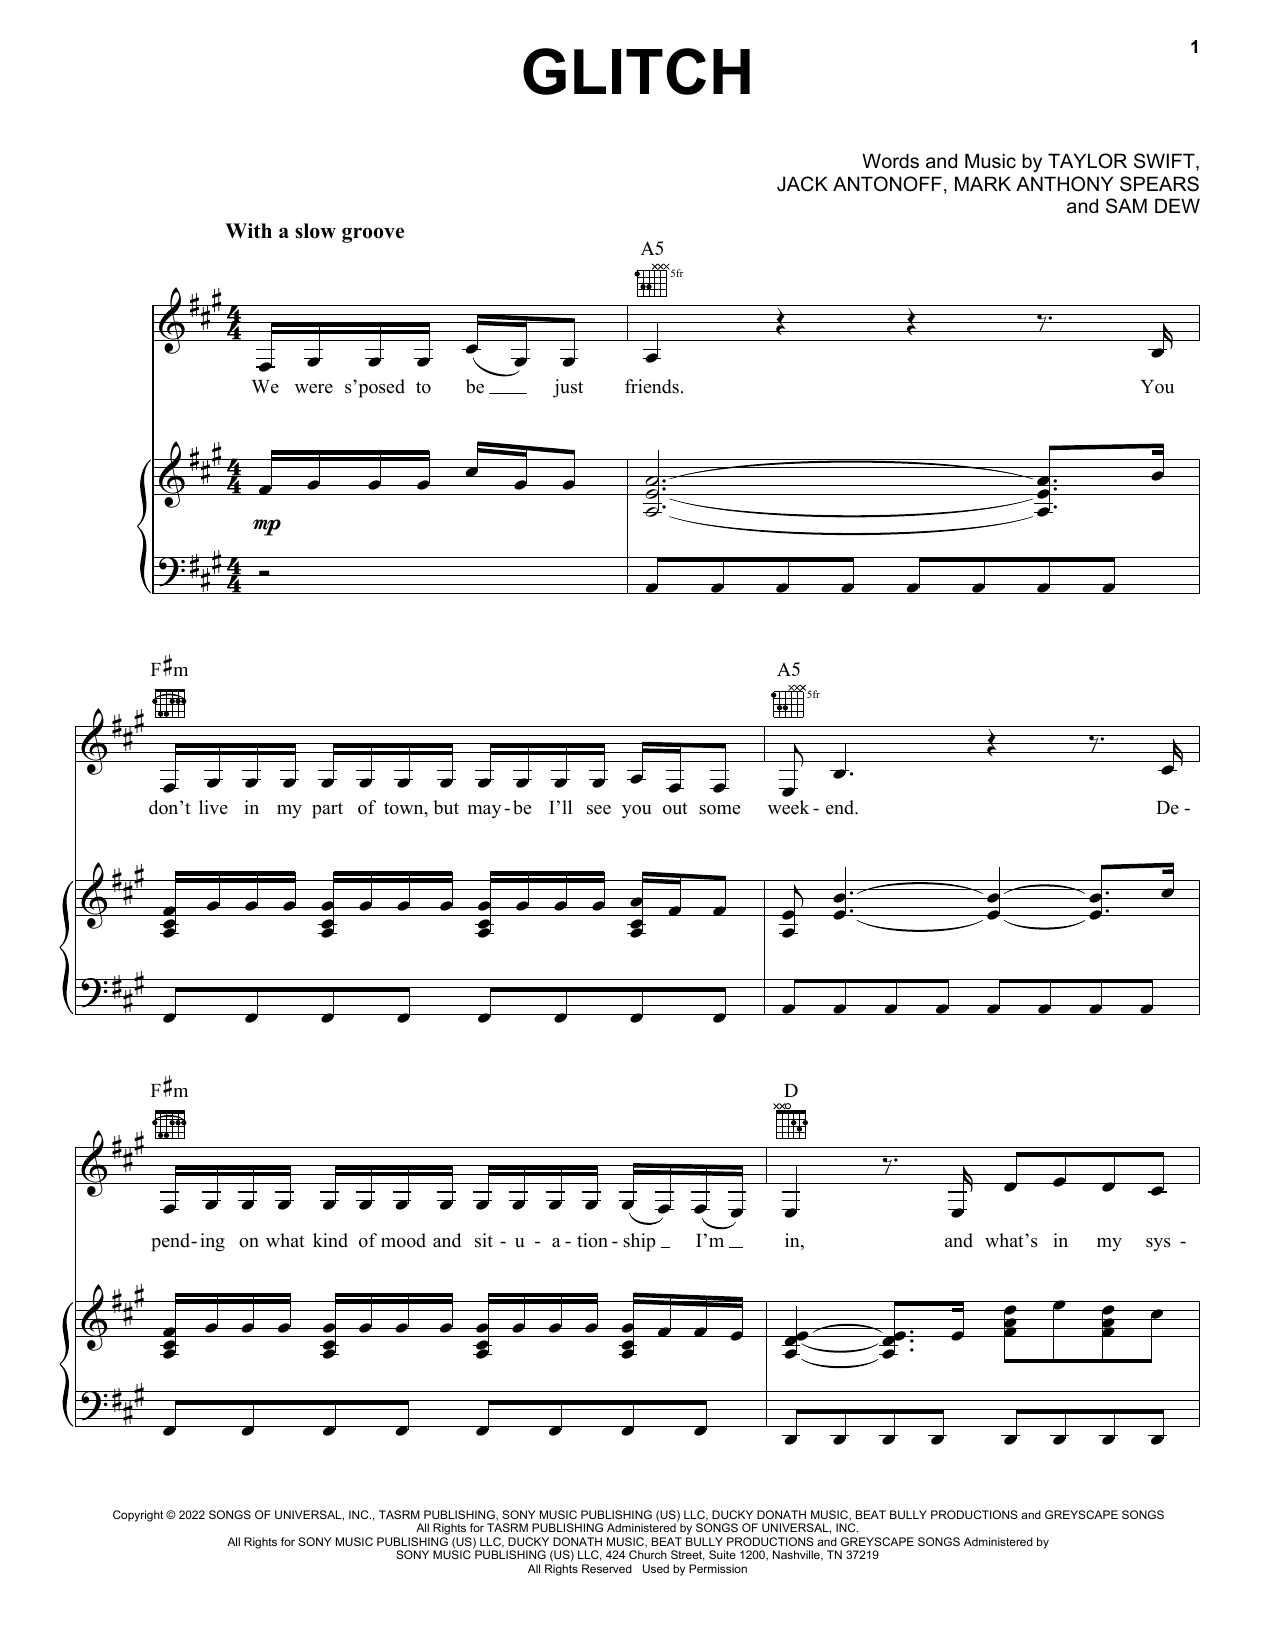 Taylor Swift Glitch sheet music notes printable PDF score